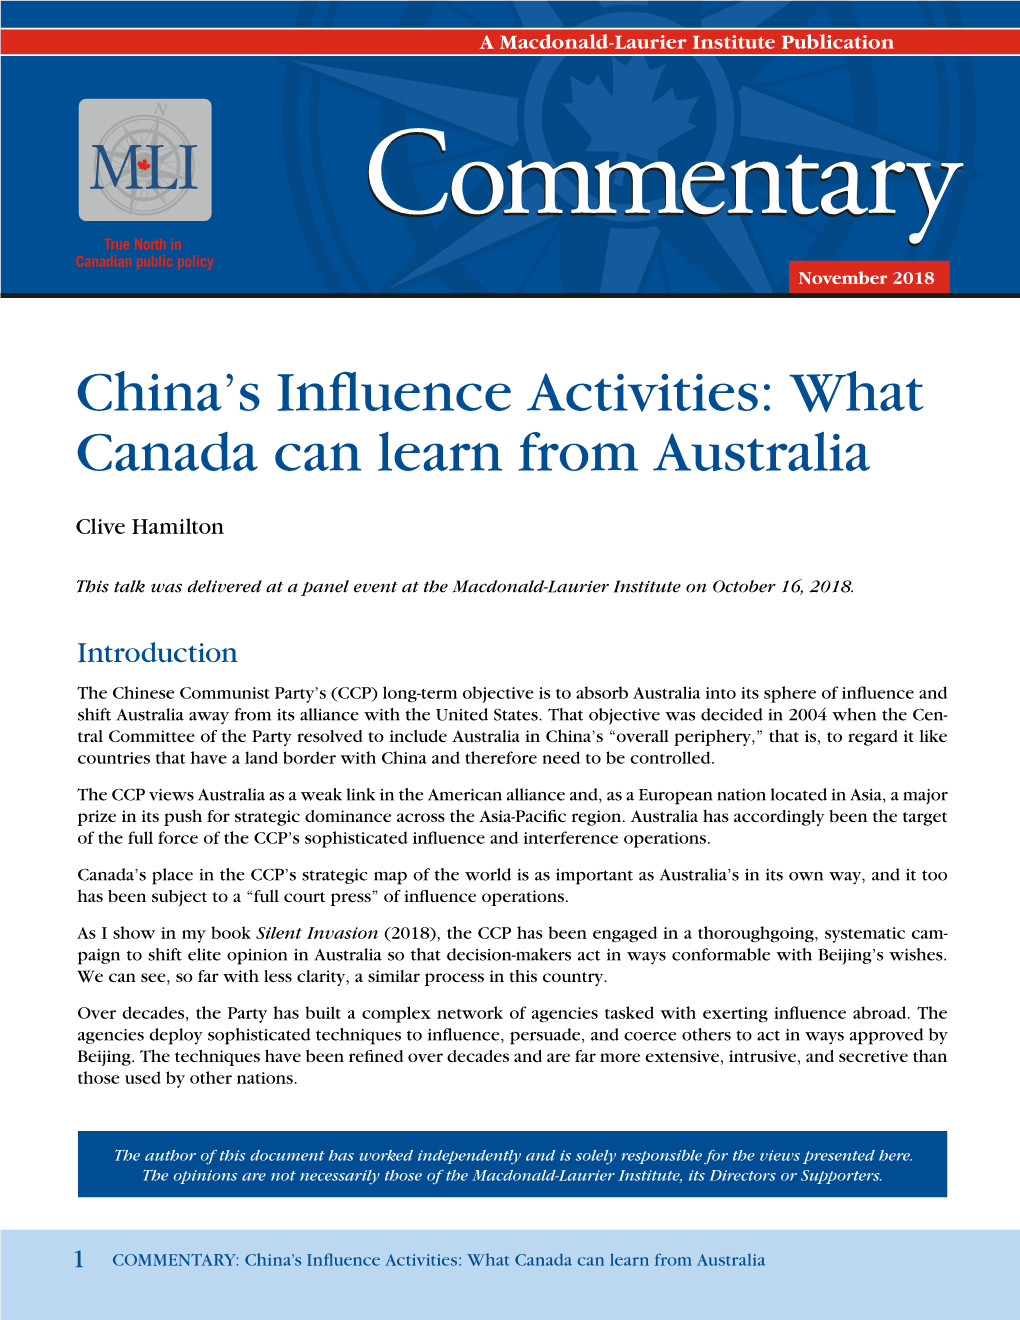 China's Influence Activities